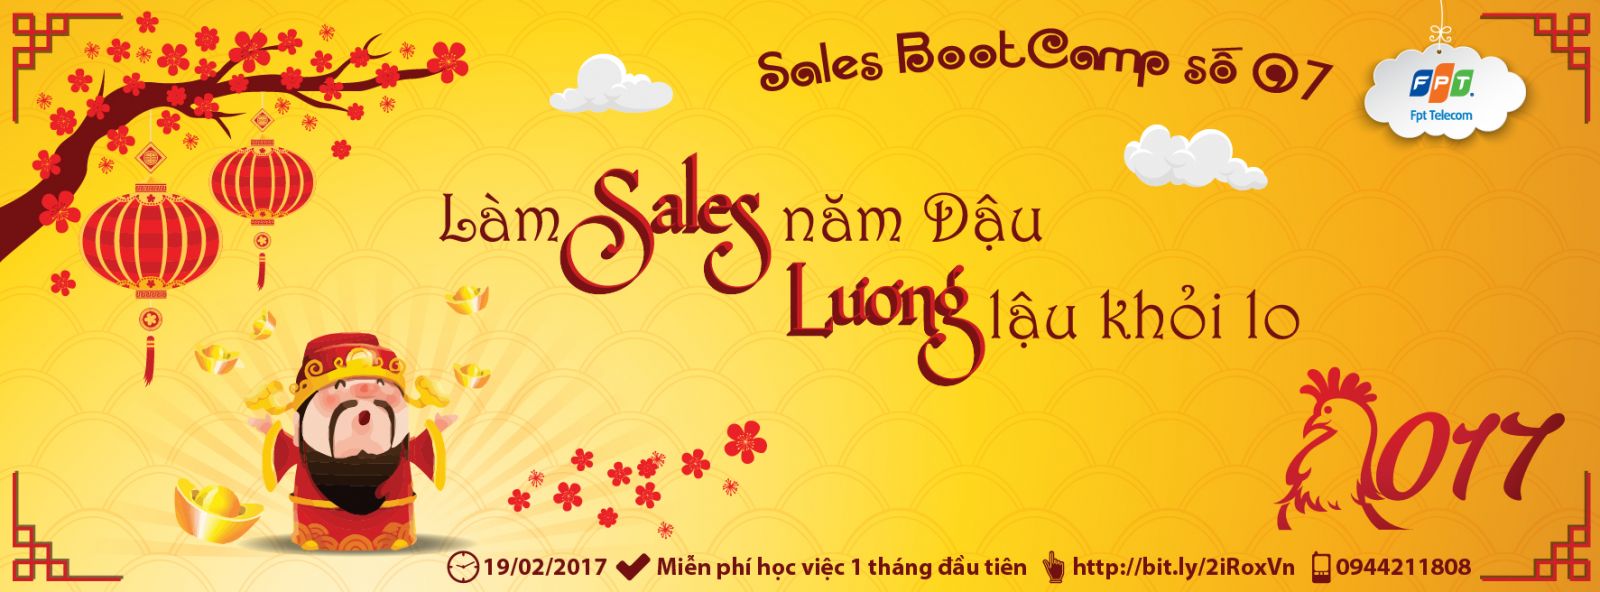 sales bootcamp so 7 